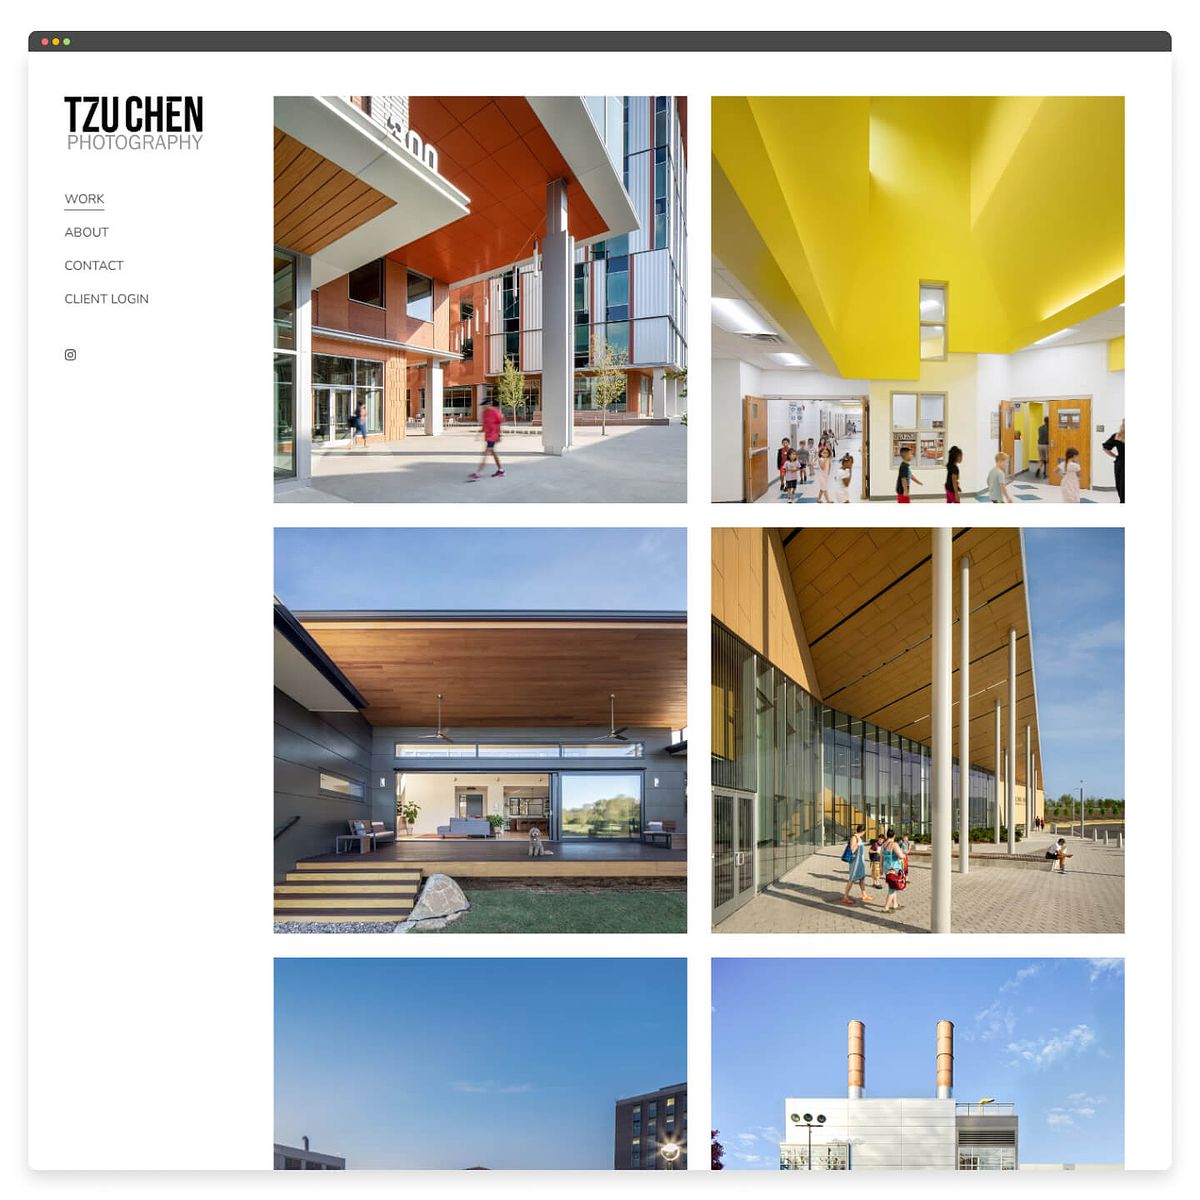 Tzu Chen - Portafolio de fotógrafos de arquitectura